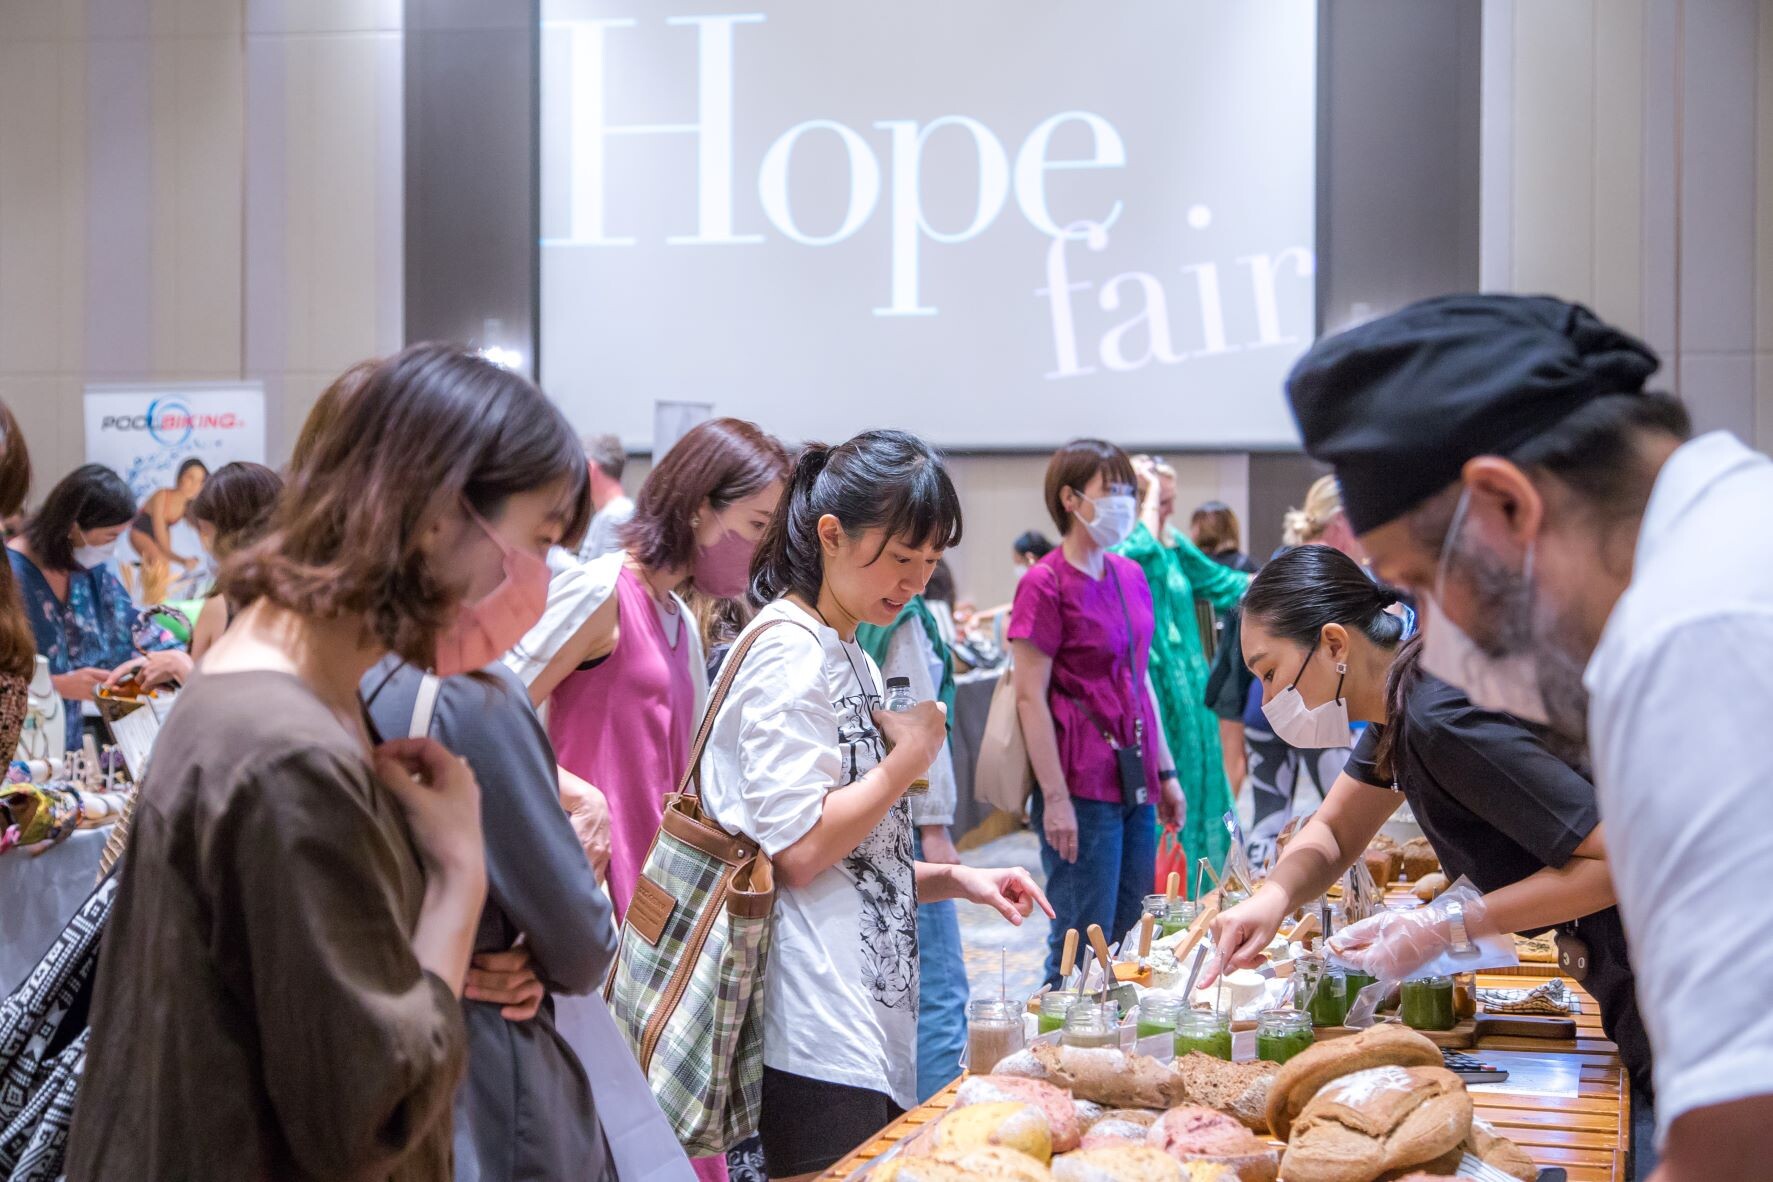 Shop until you drop and do good at the same time at Hope Fair event, Avani Sukhumvit Bangkok